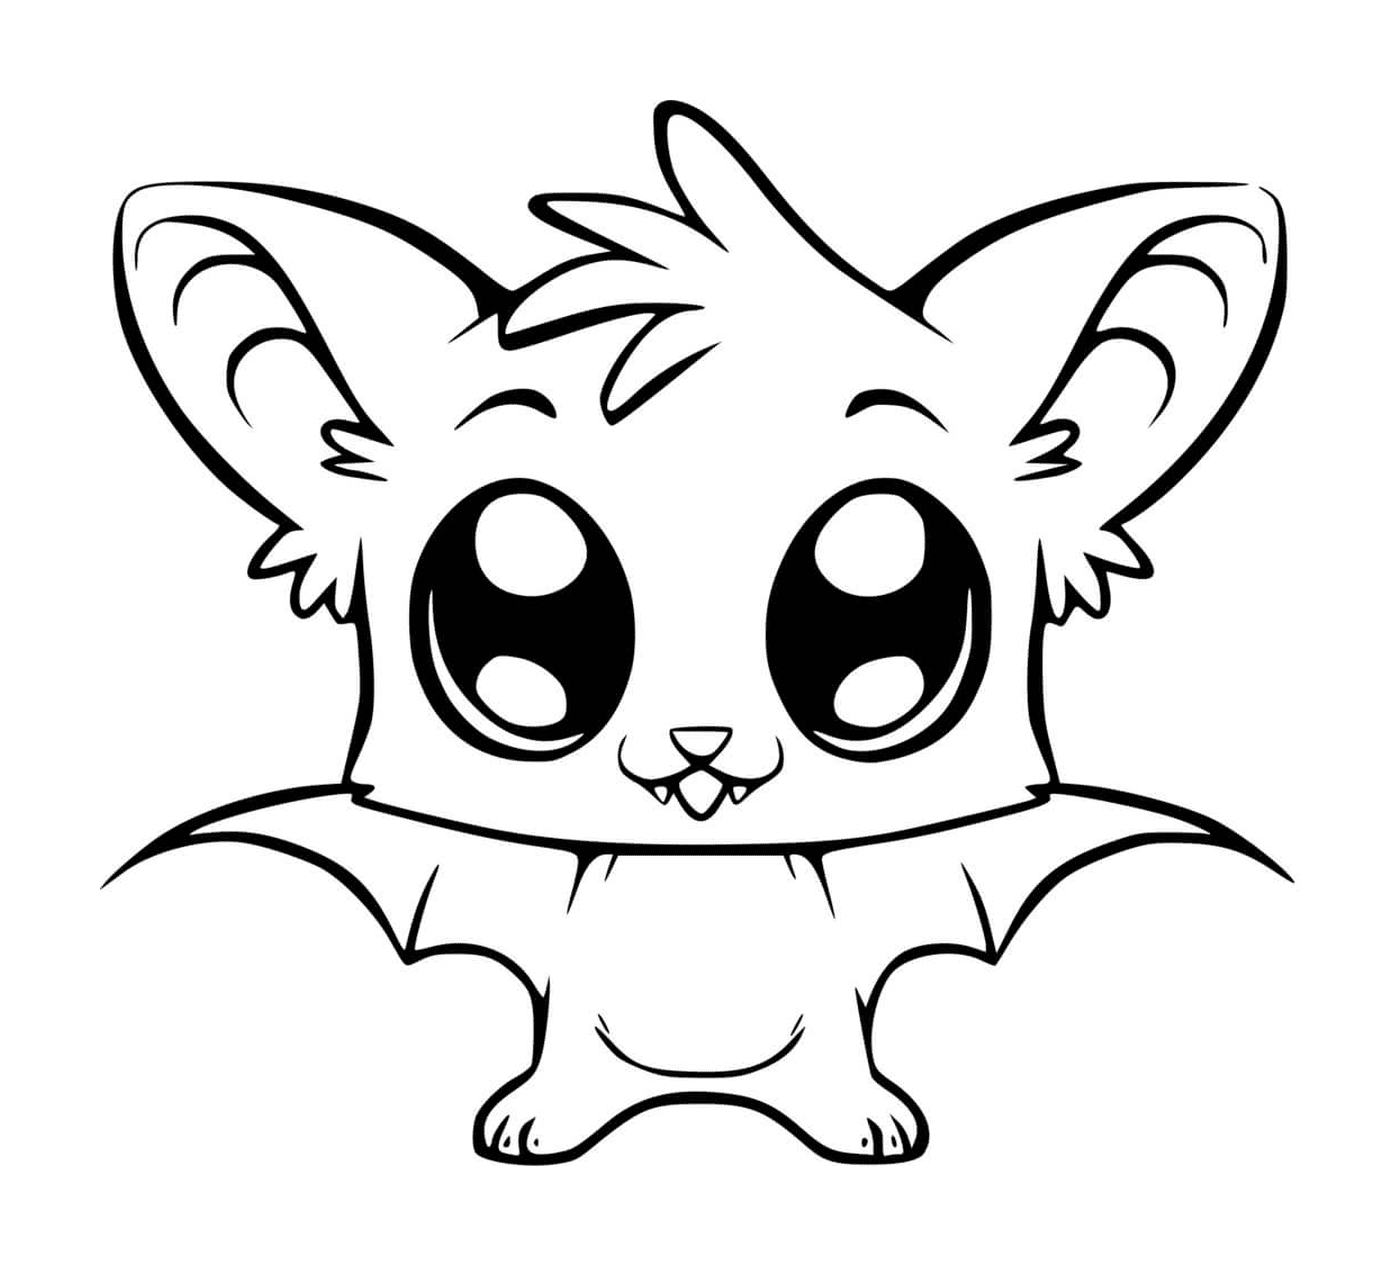  adorable murciélago kawaii 